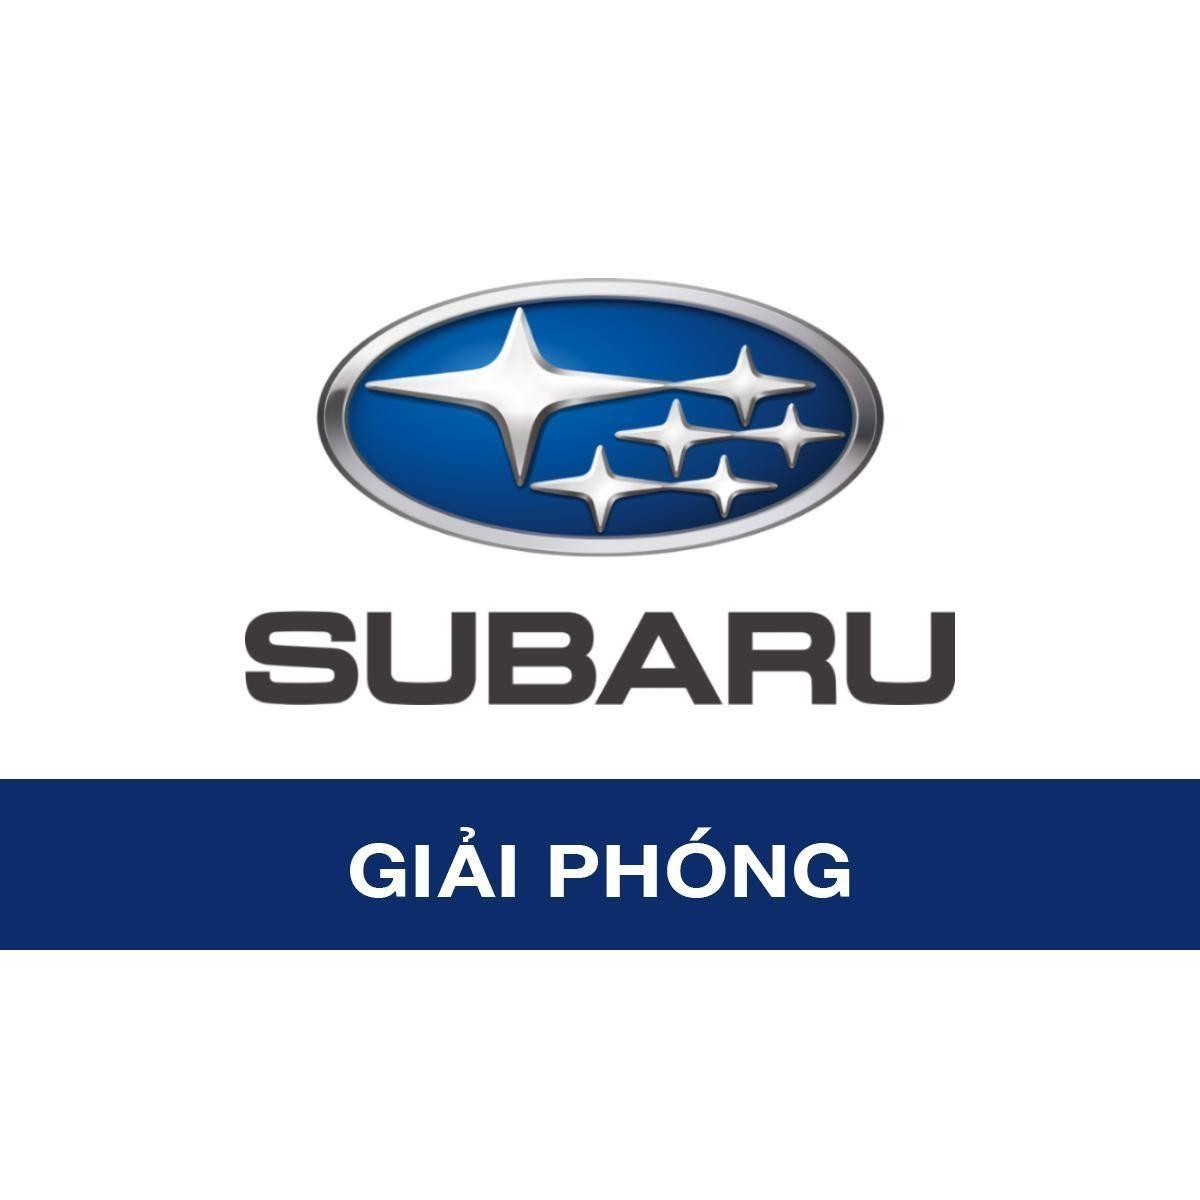 Subaru Giải Phóng